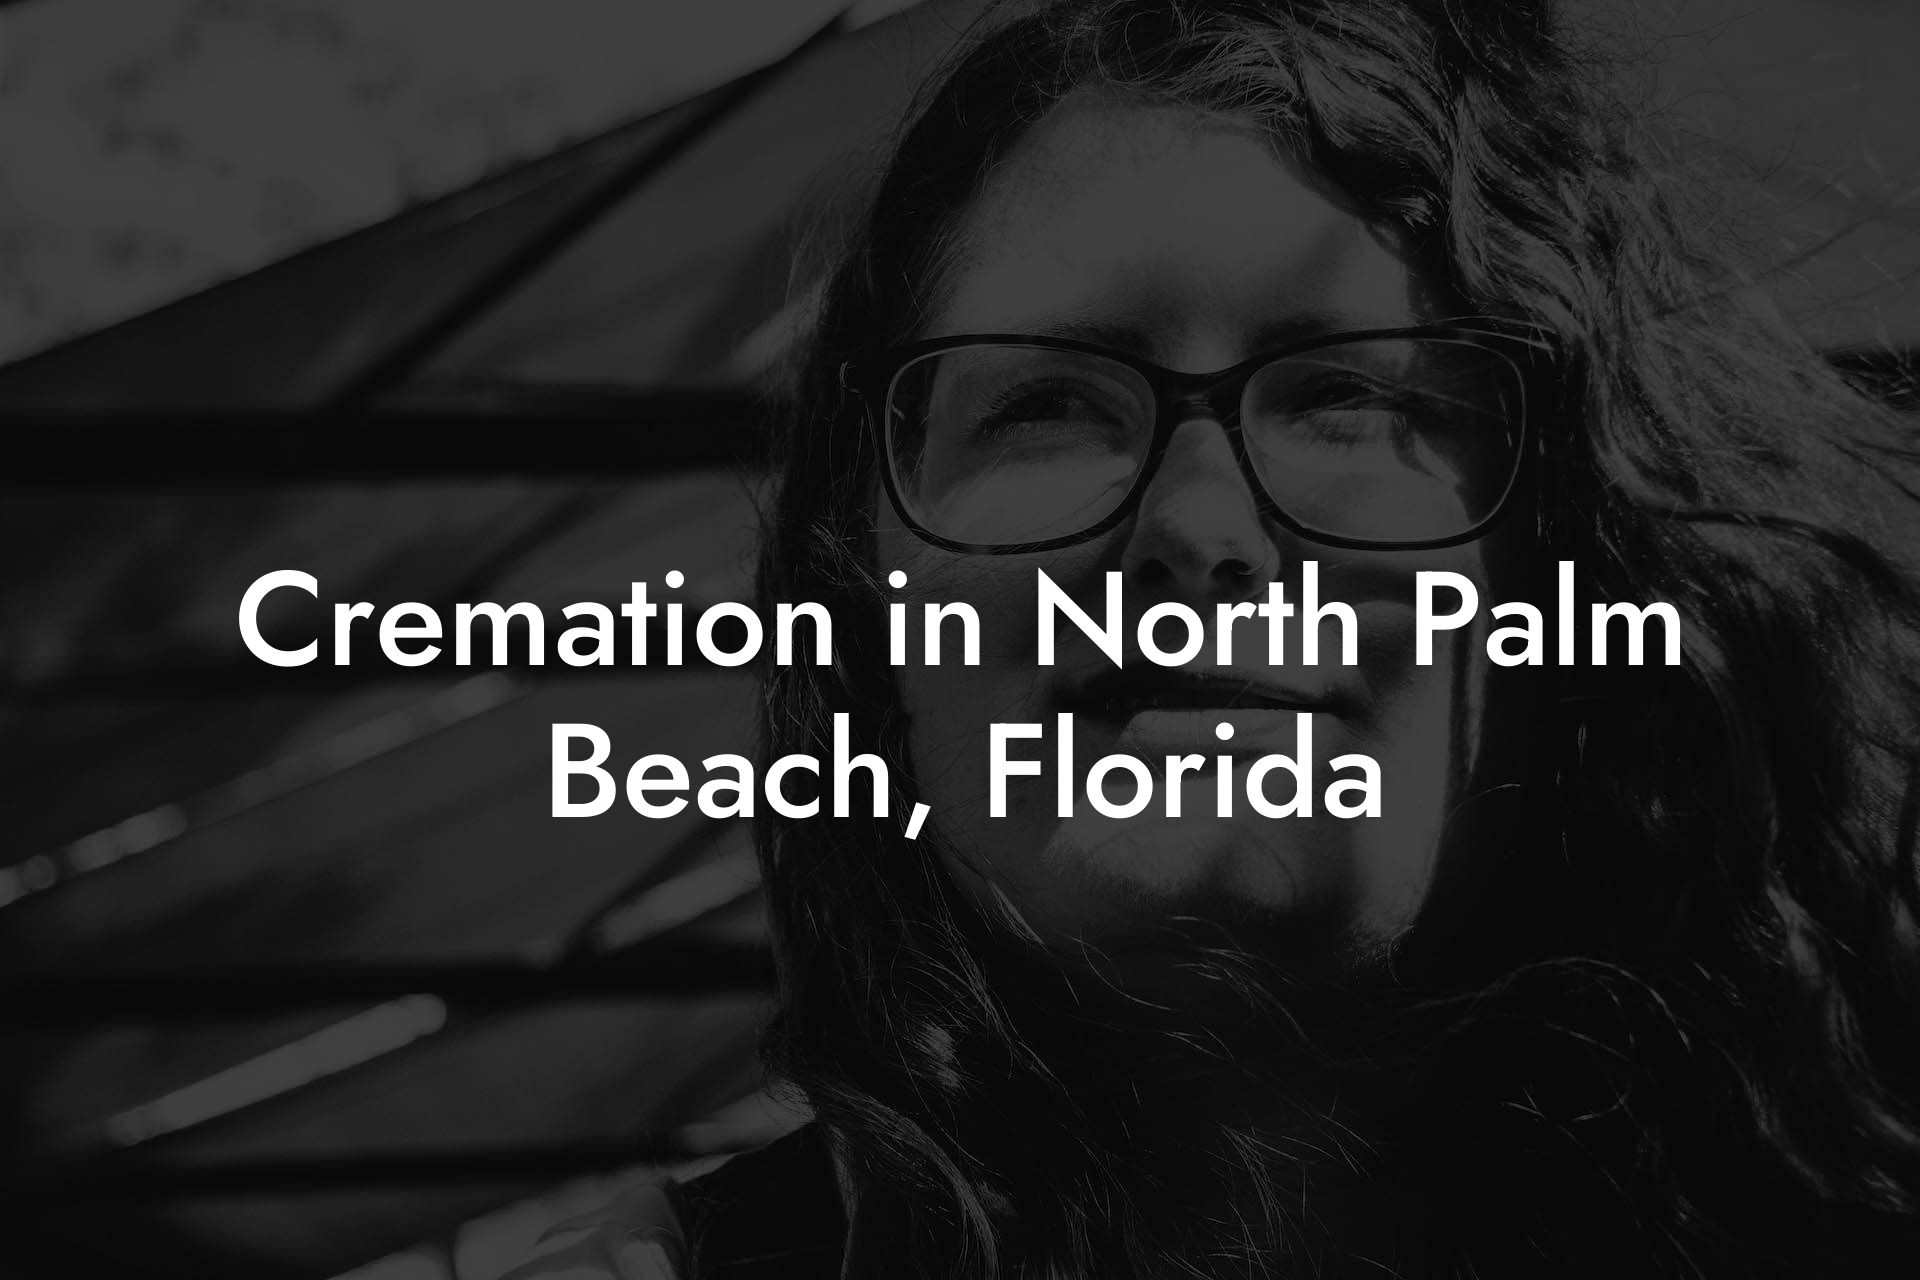 Cremation in North Palm Beach, Florida